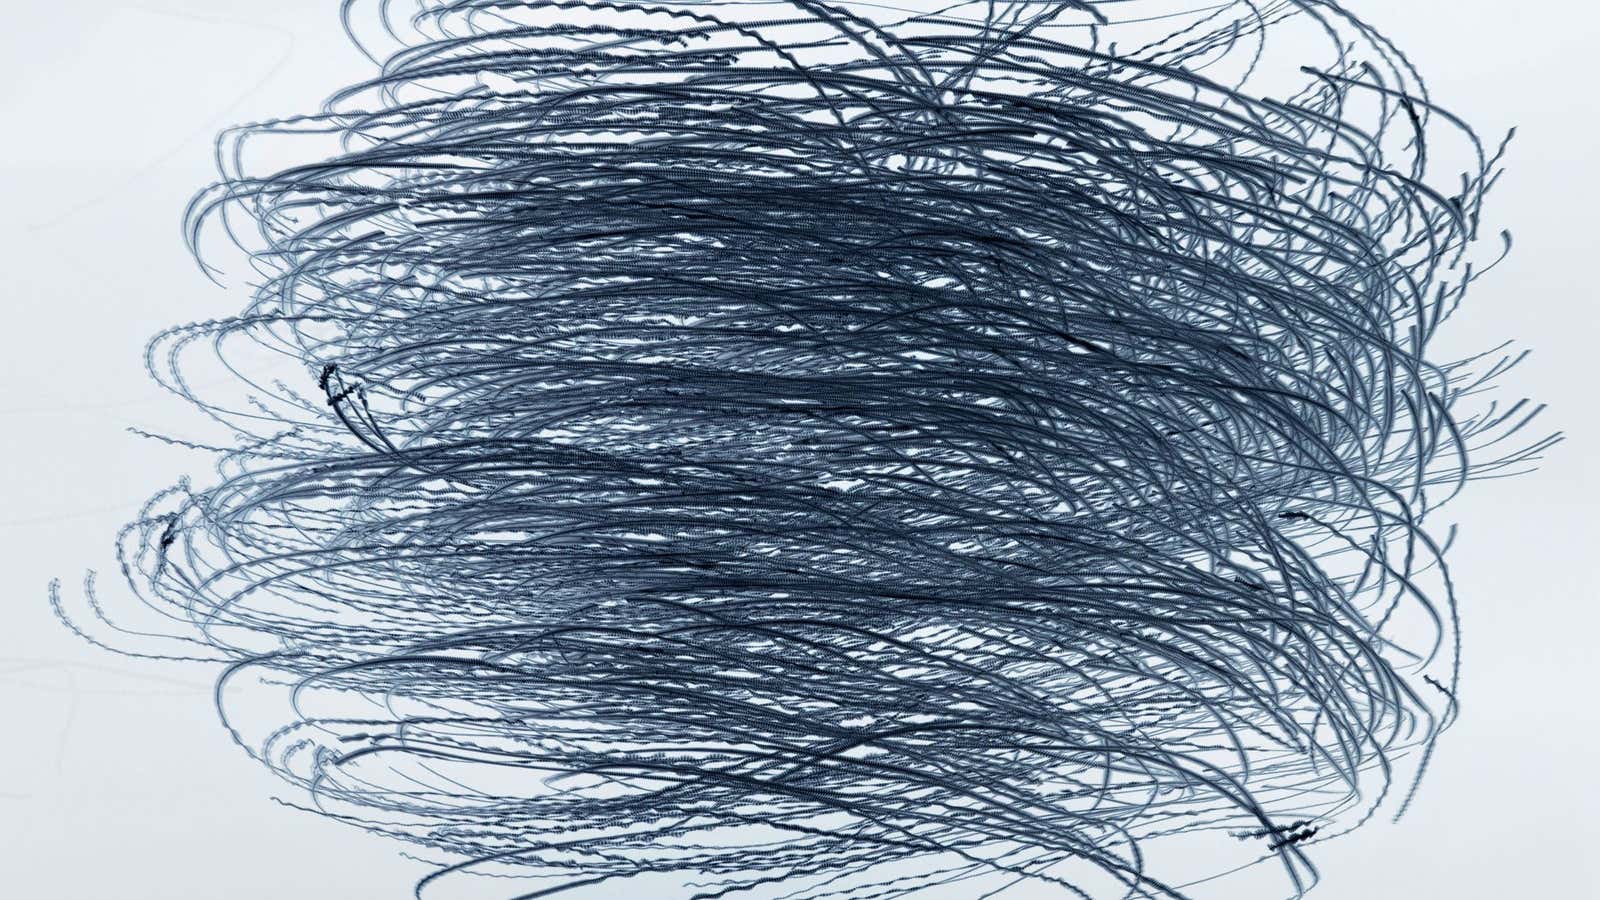 One of Xavi Bou’s images depicting the interlocking flight patterns of birds.